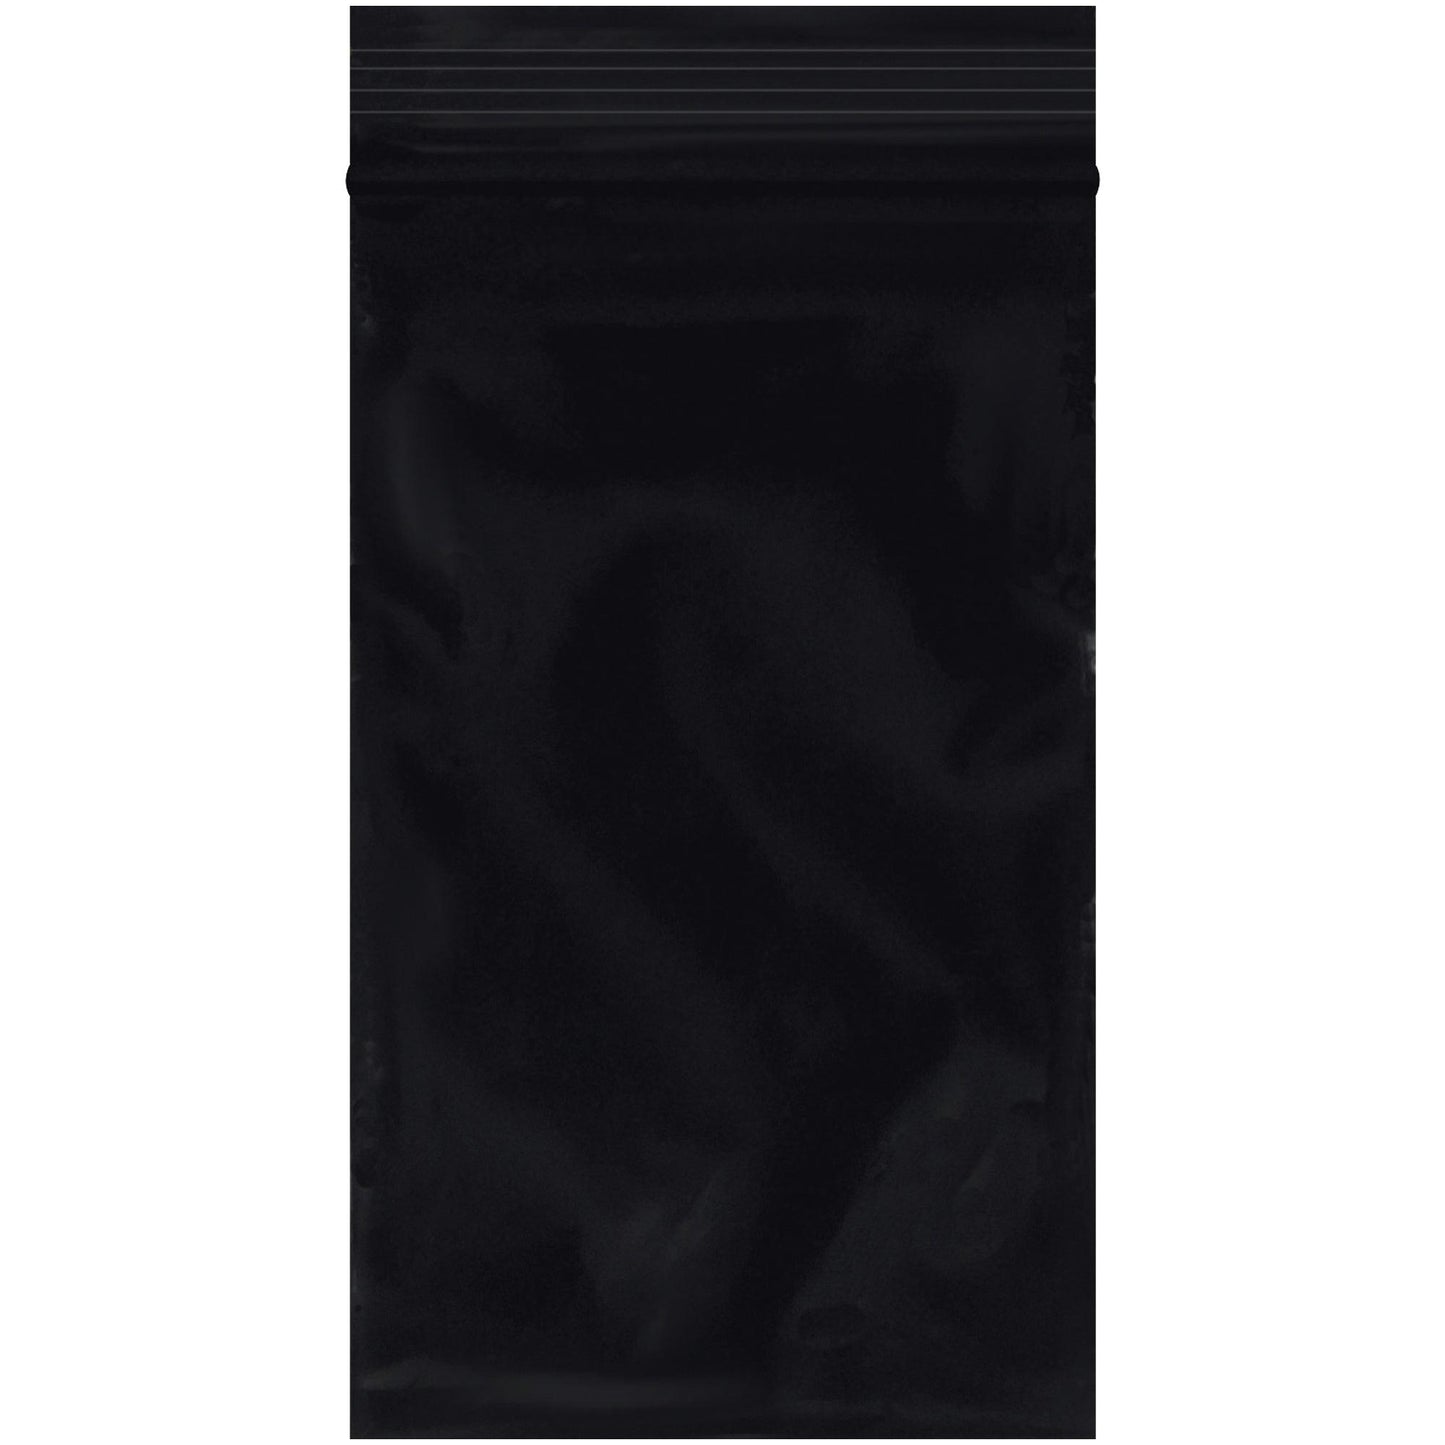 3 x 5" - 2 Mil Black Reclosable Poly Bags - PB3550BK